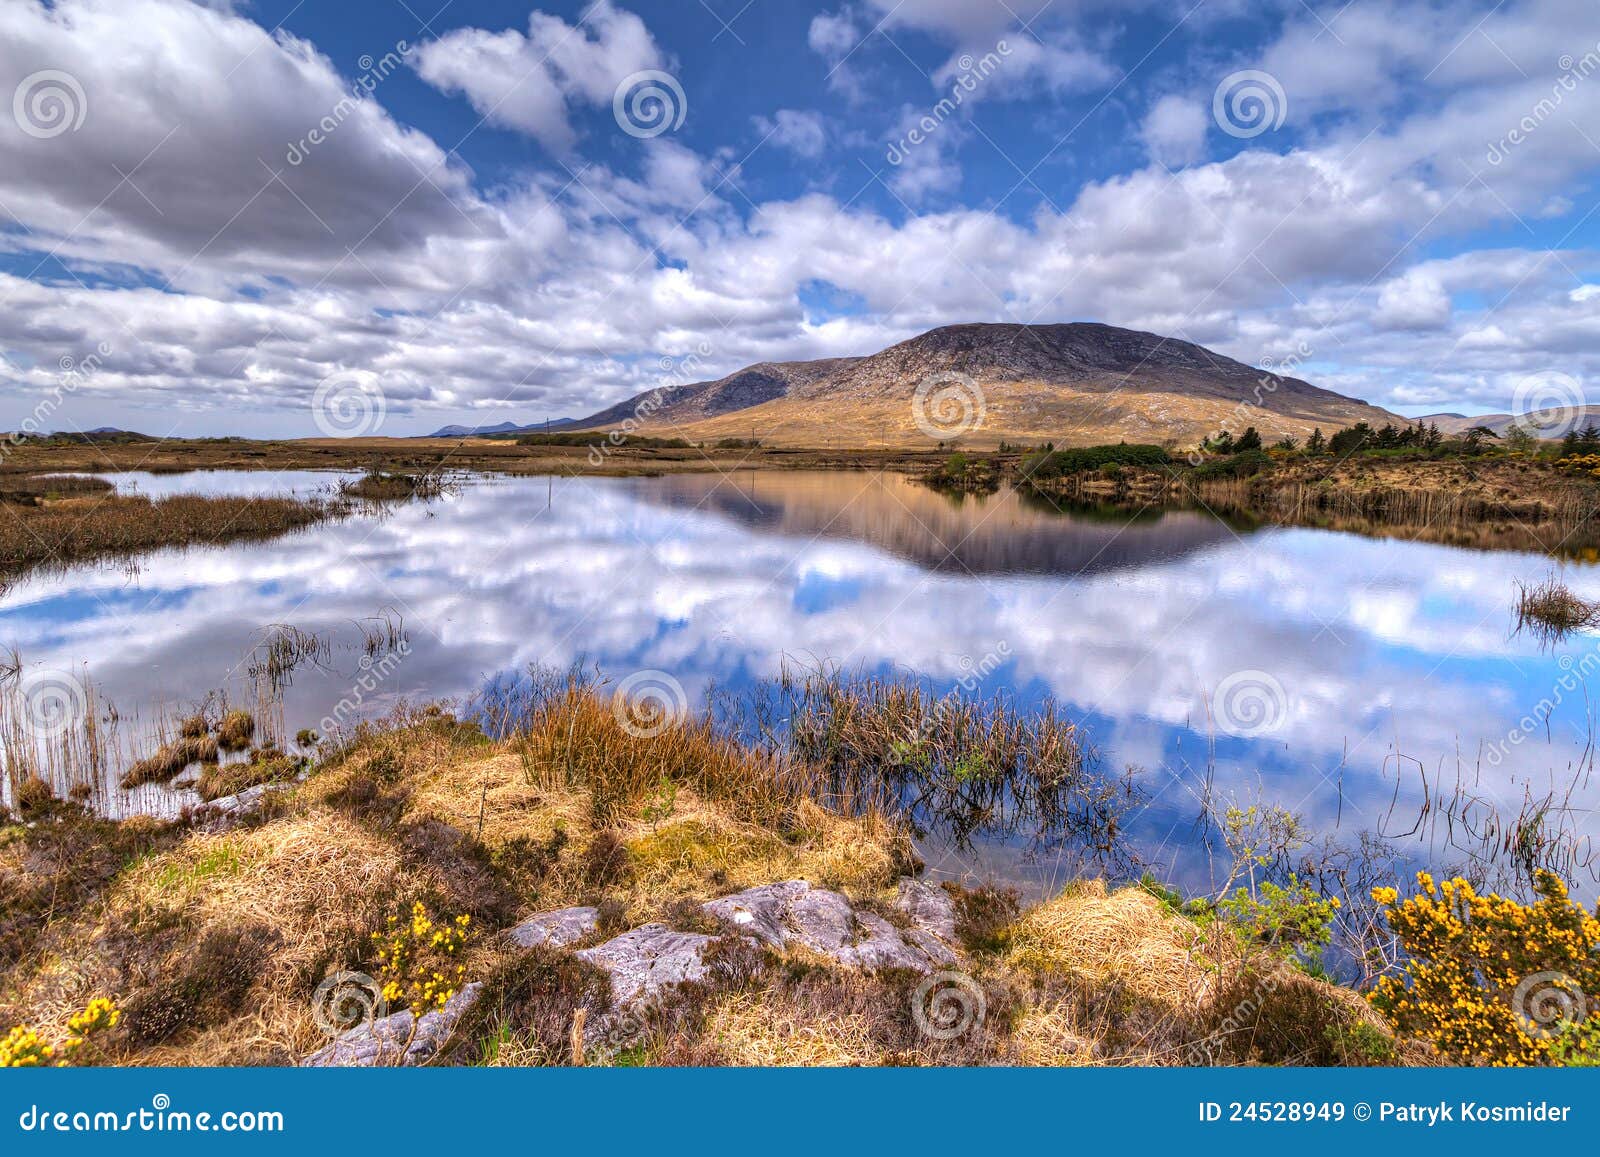 Connemara mountains and lake scenery, Ireland